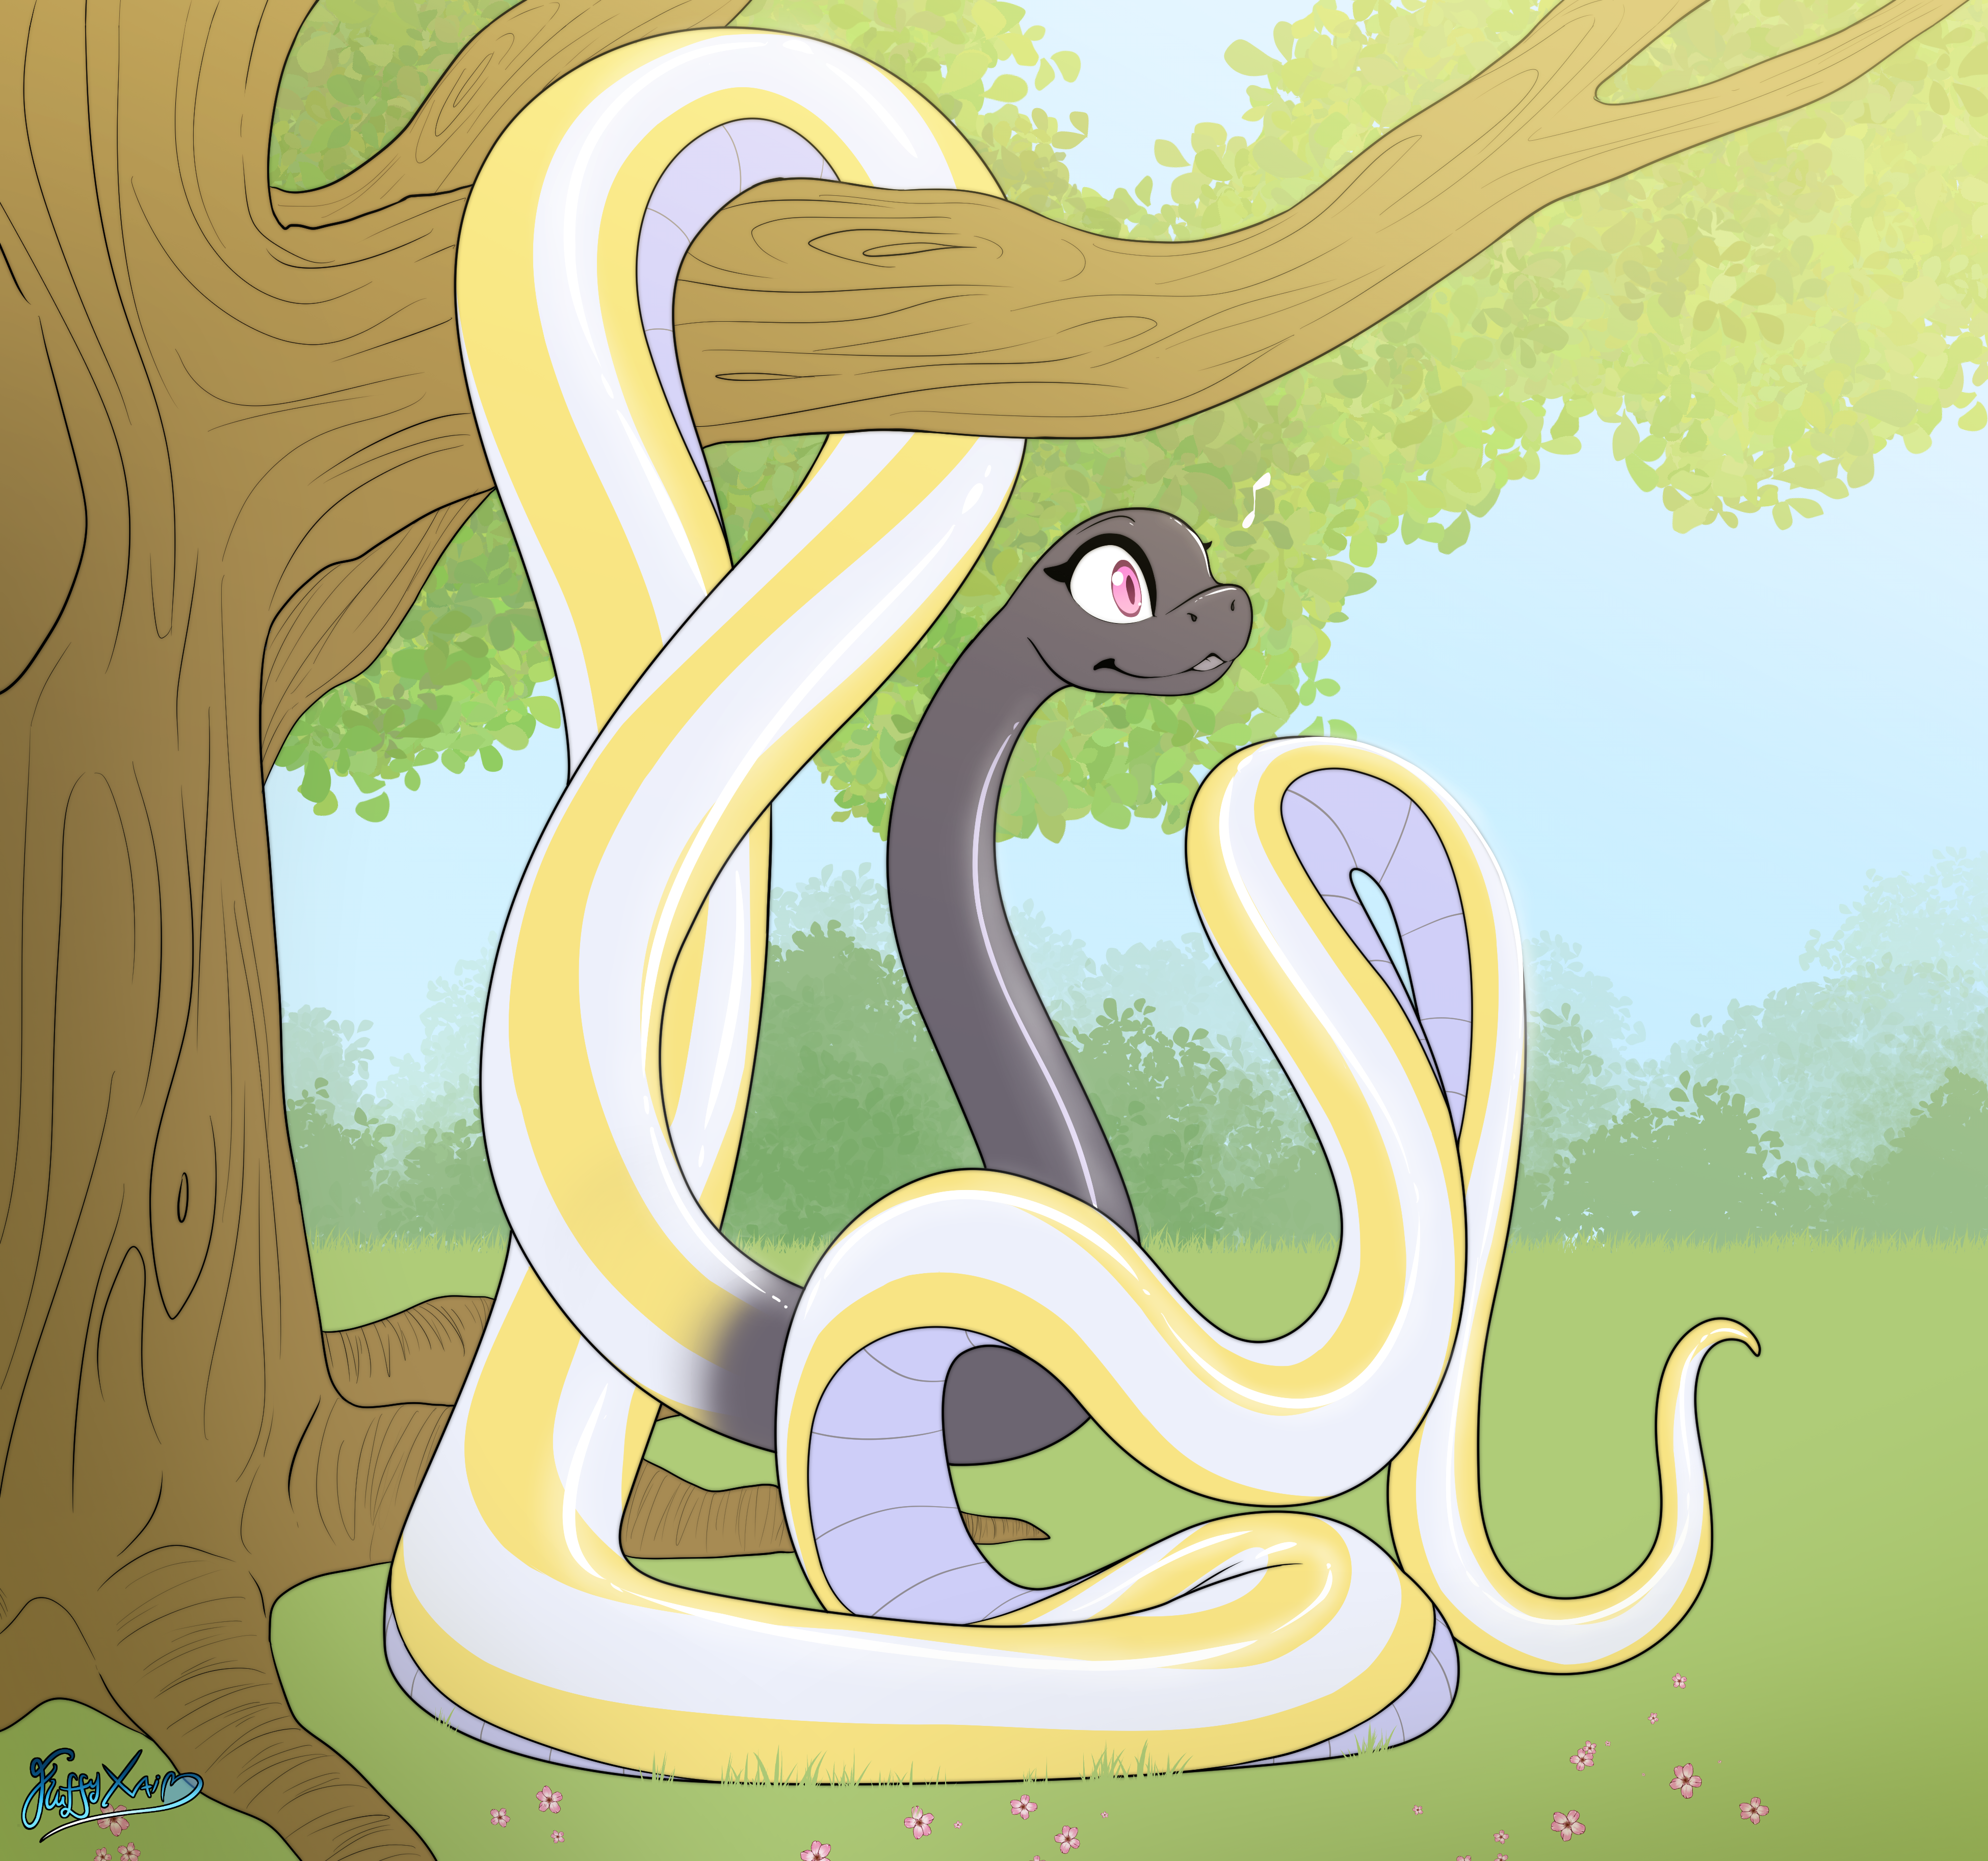 Pixilart - Google Snake by TrixieWixie